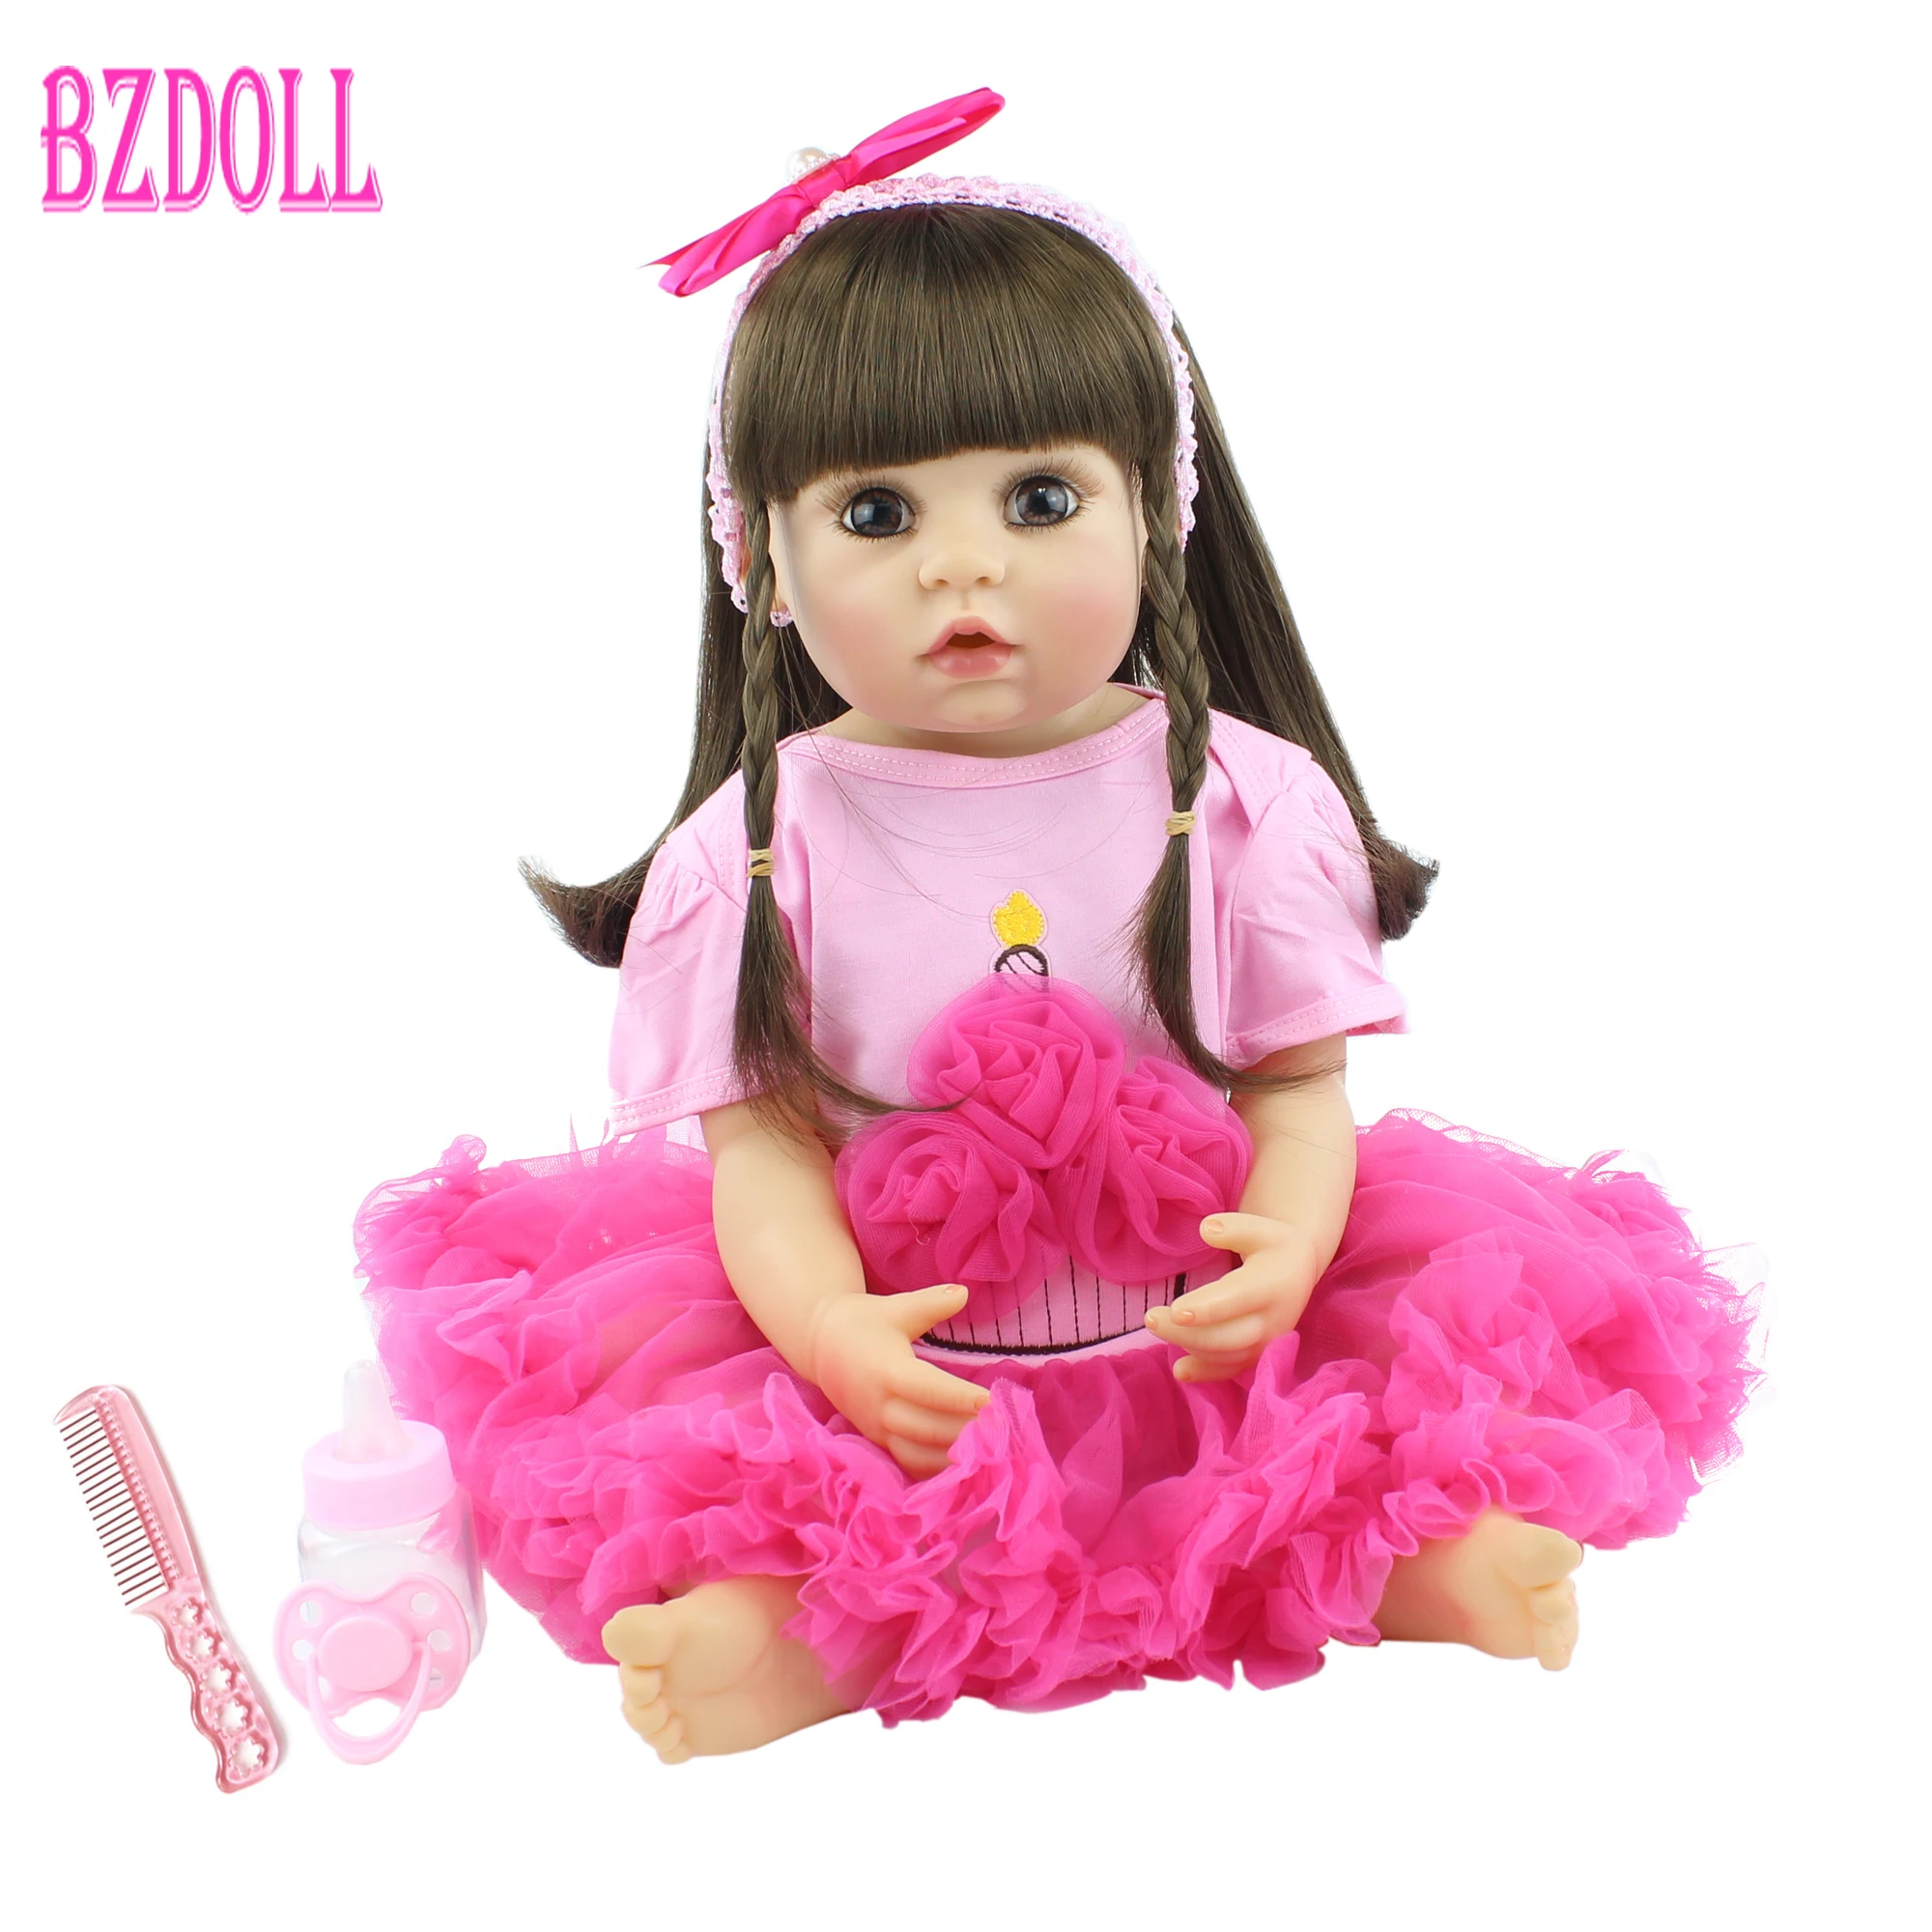 

55cm Full Body Soft Silicone Reborn Doll Toy For Girl Newborn Princess Toddler Alive Babies Bebe Boneca Bathe Toy Child Gift